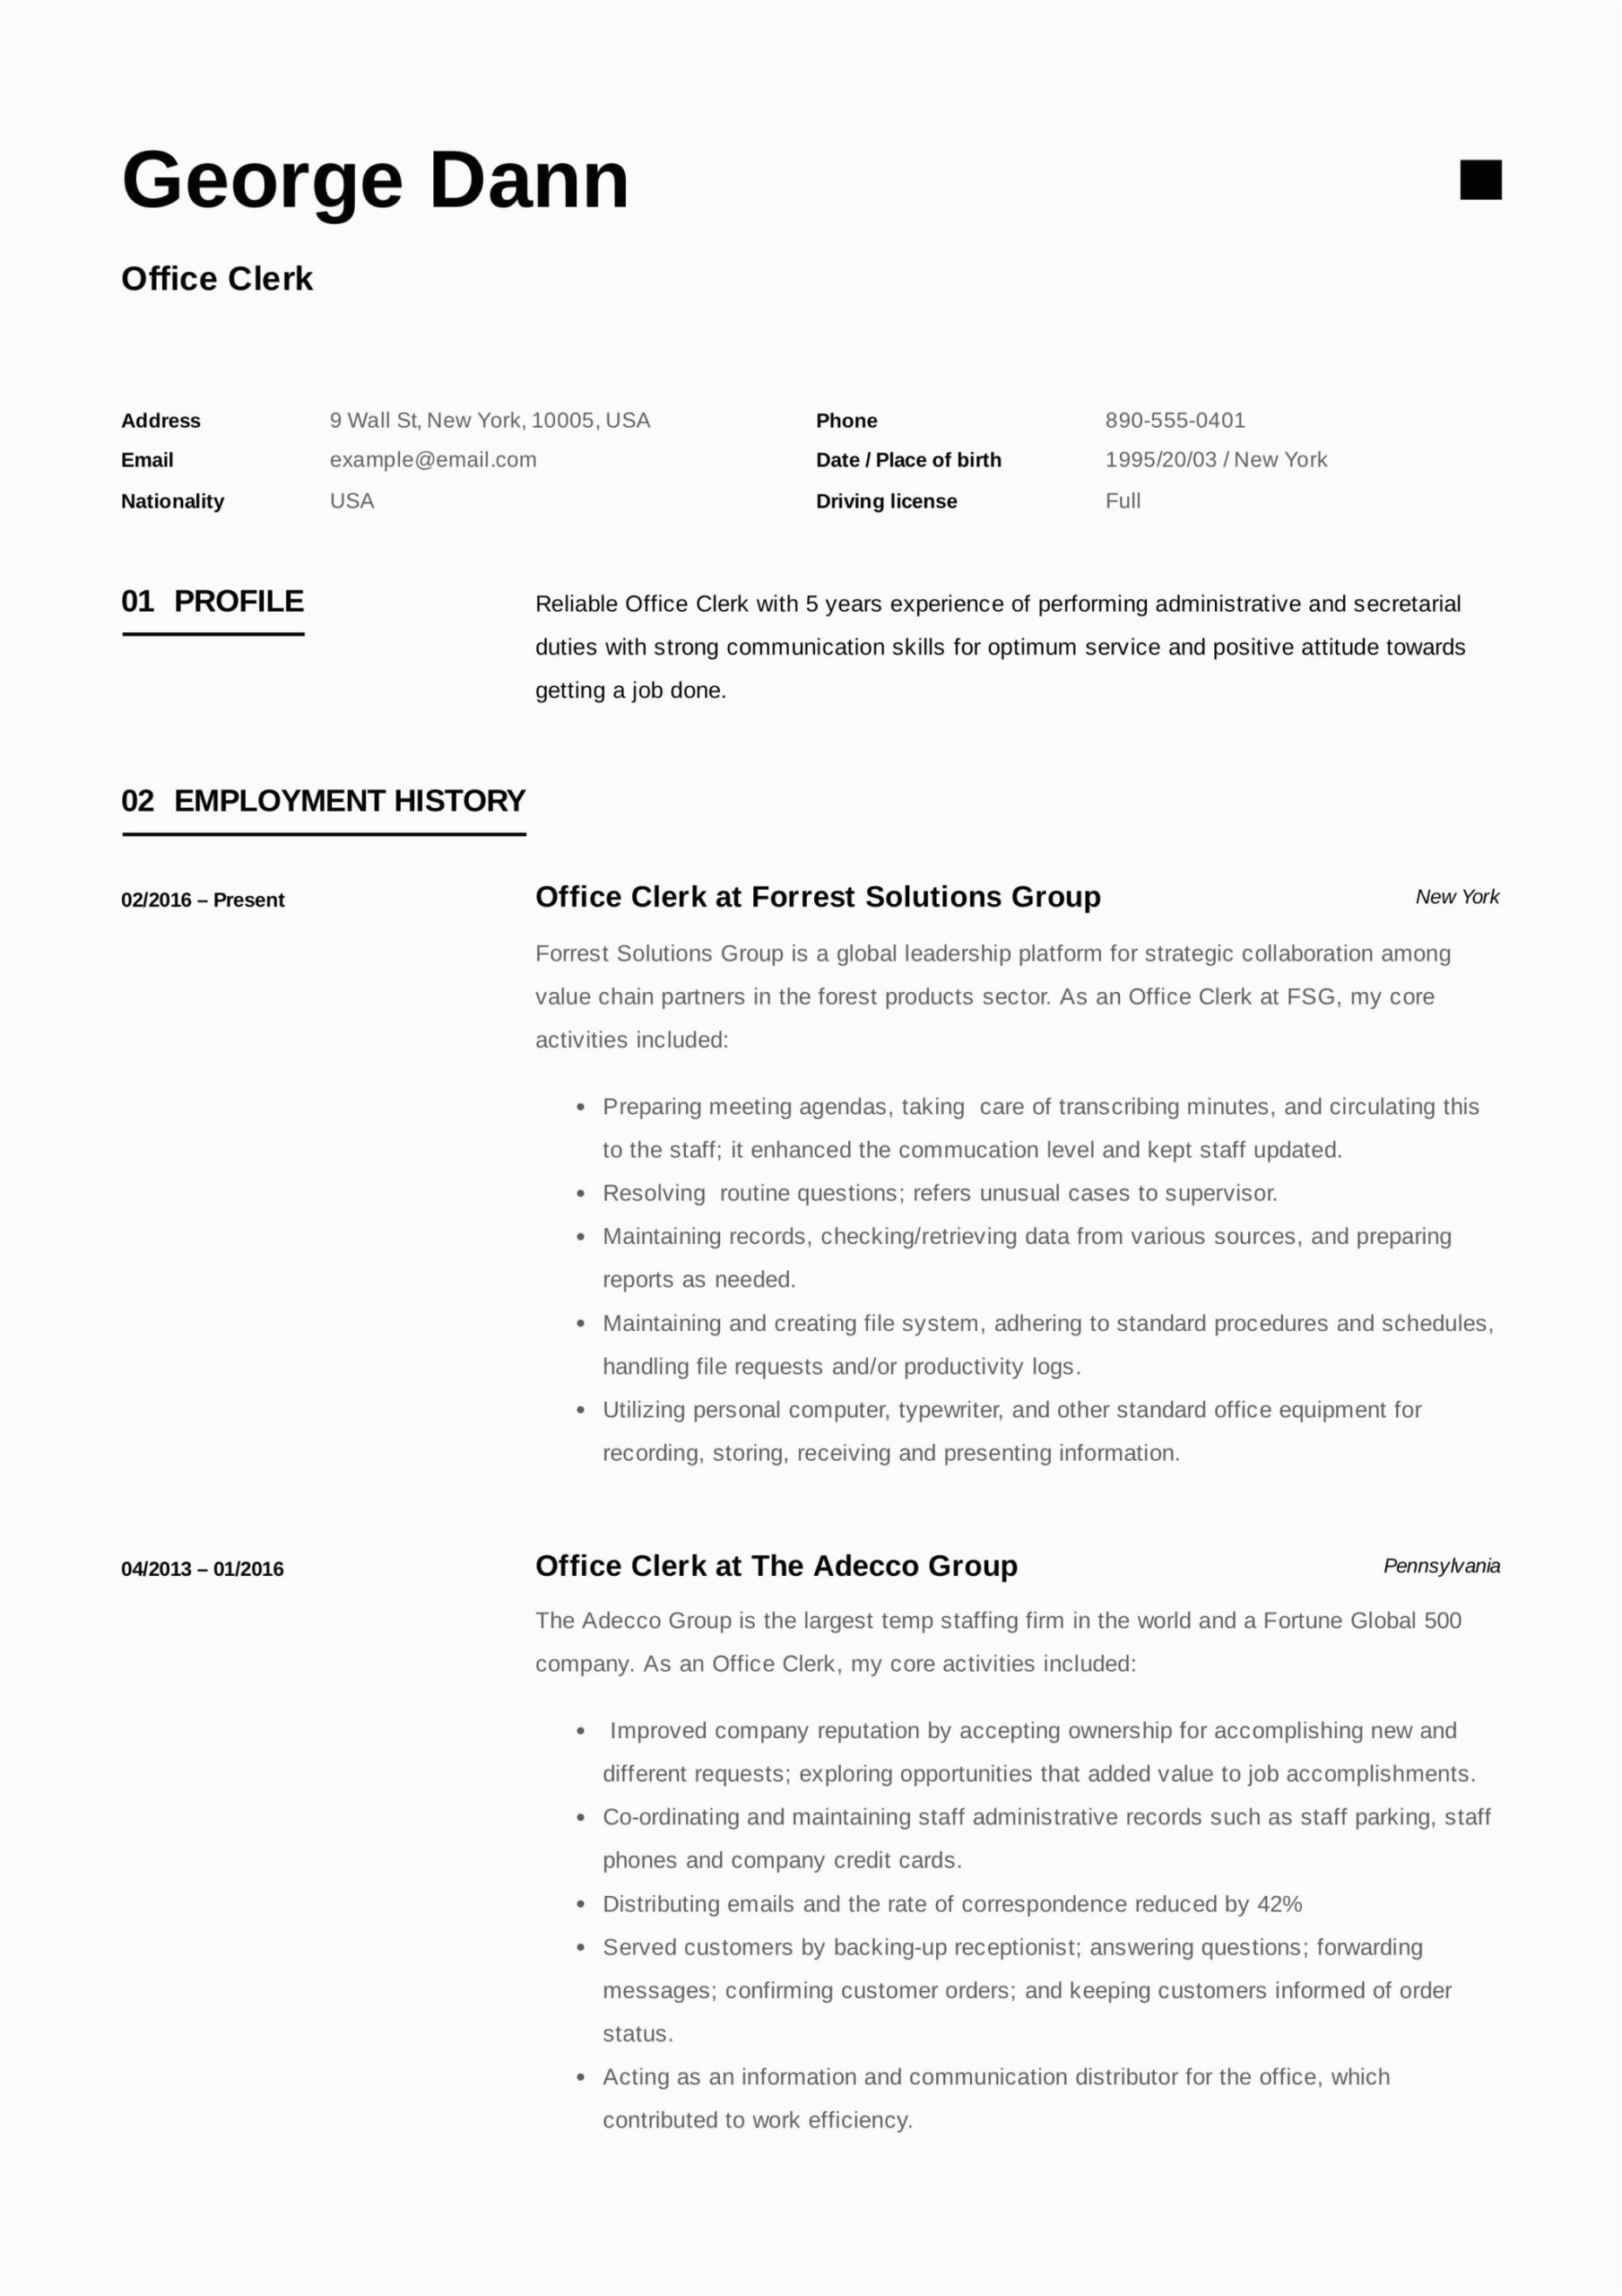 Office Clerk Job Description Resume Sample Full Guide Fice Clerk Resume [ 12] Samples Pdf